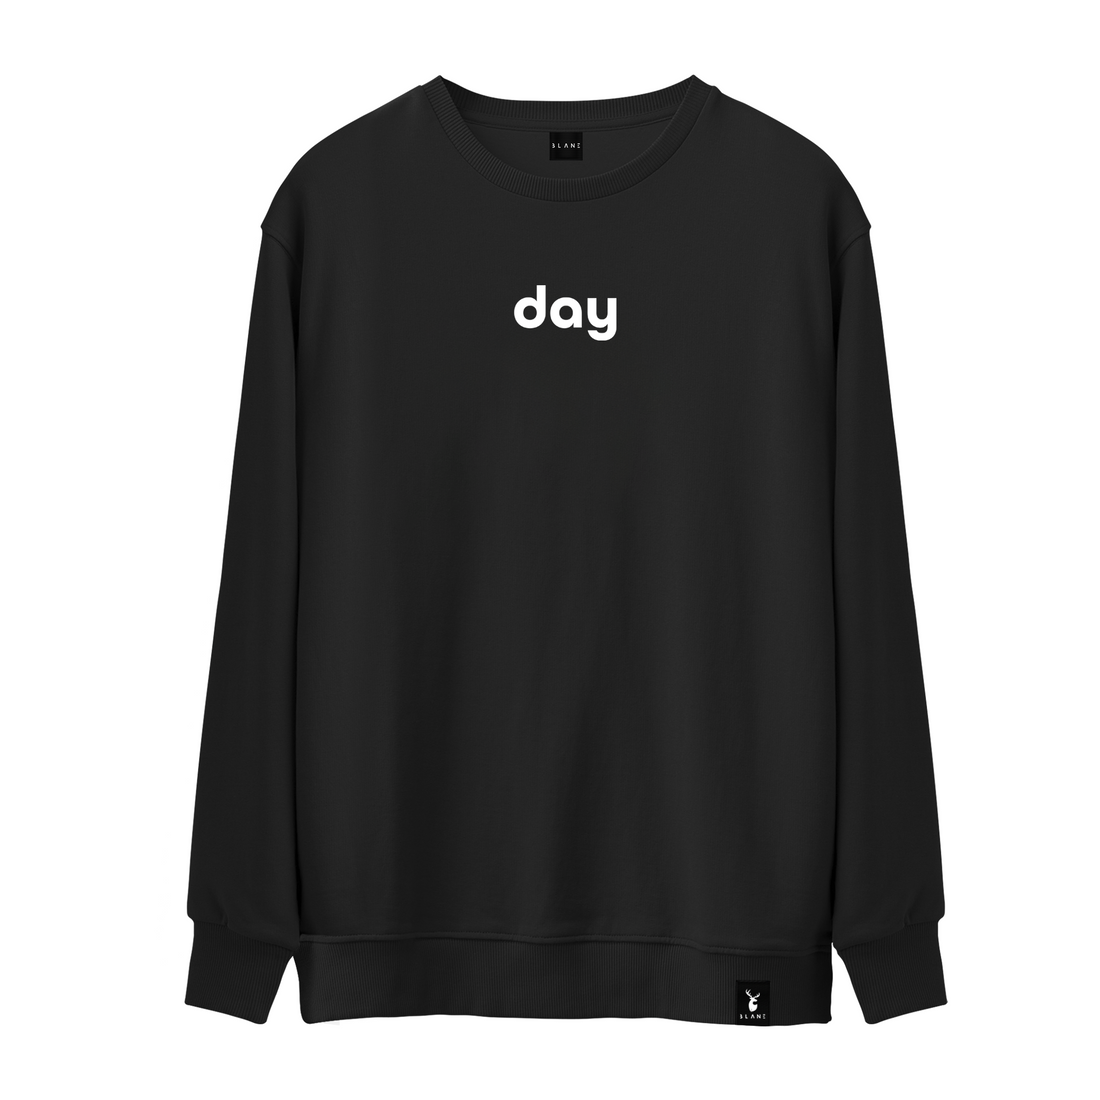 Day - Sweatshirt